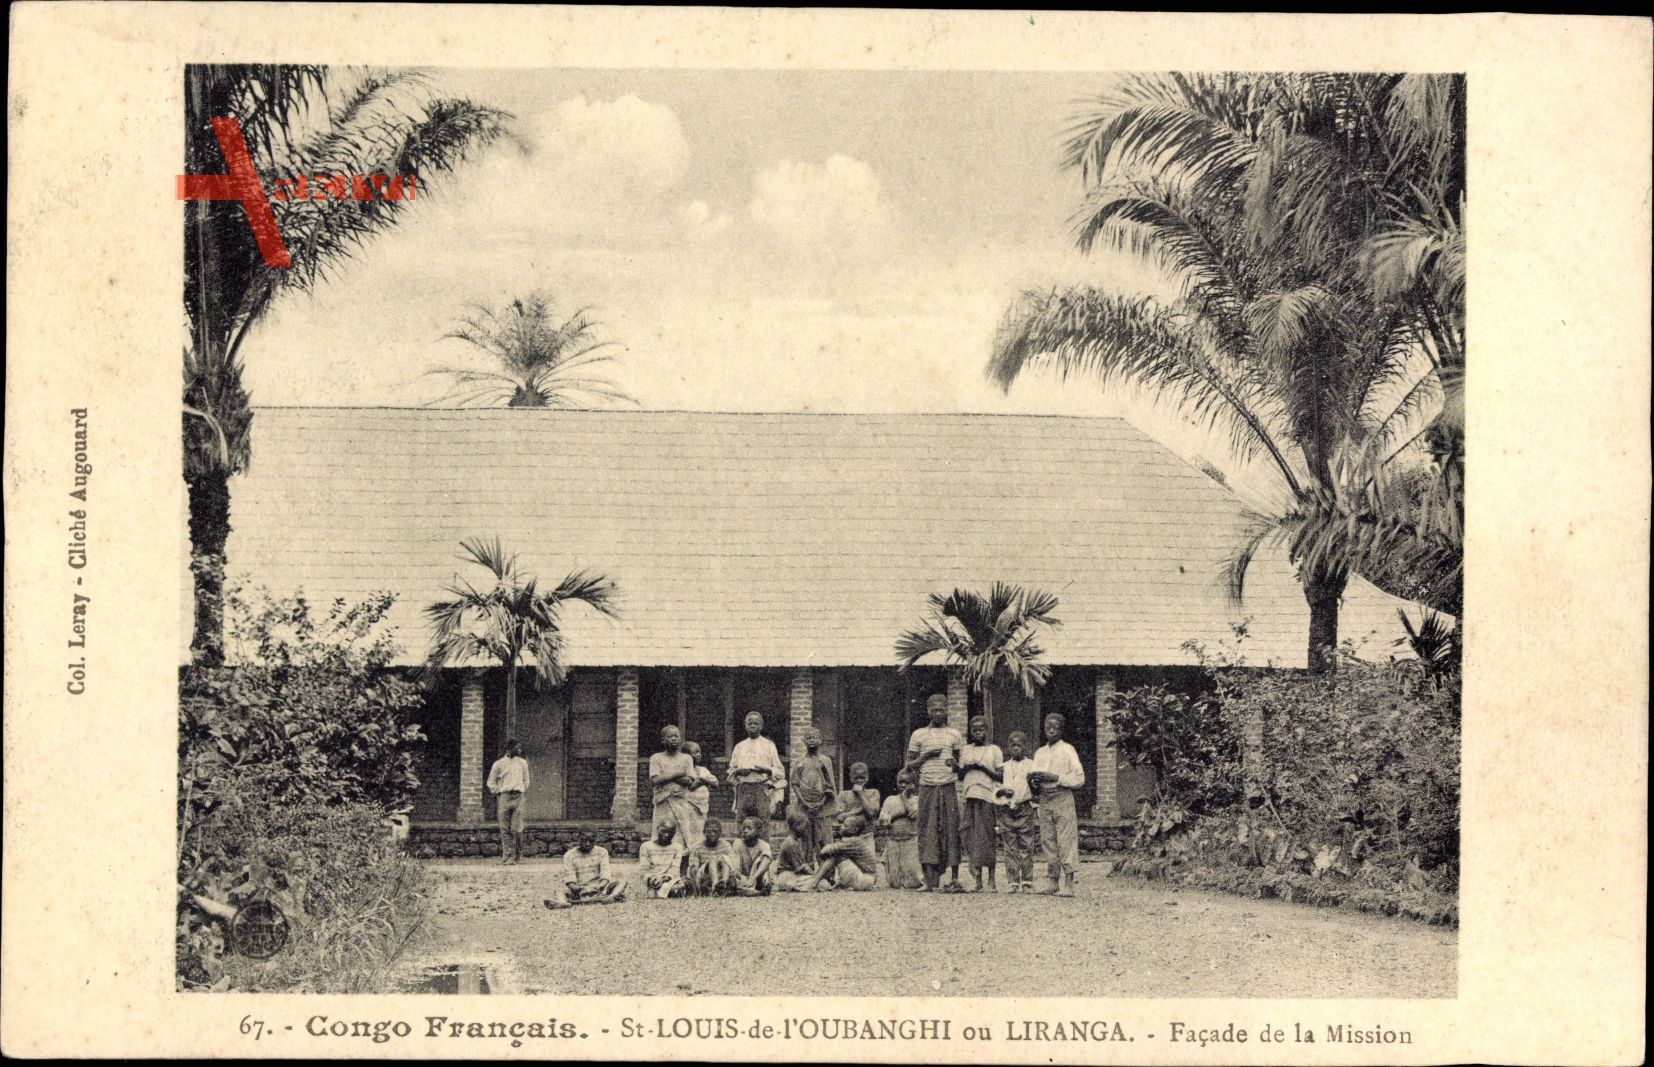 Französisch Kongo, St. Louis de lOubanghi ou Liranga, Mission